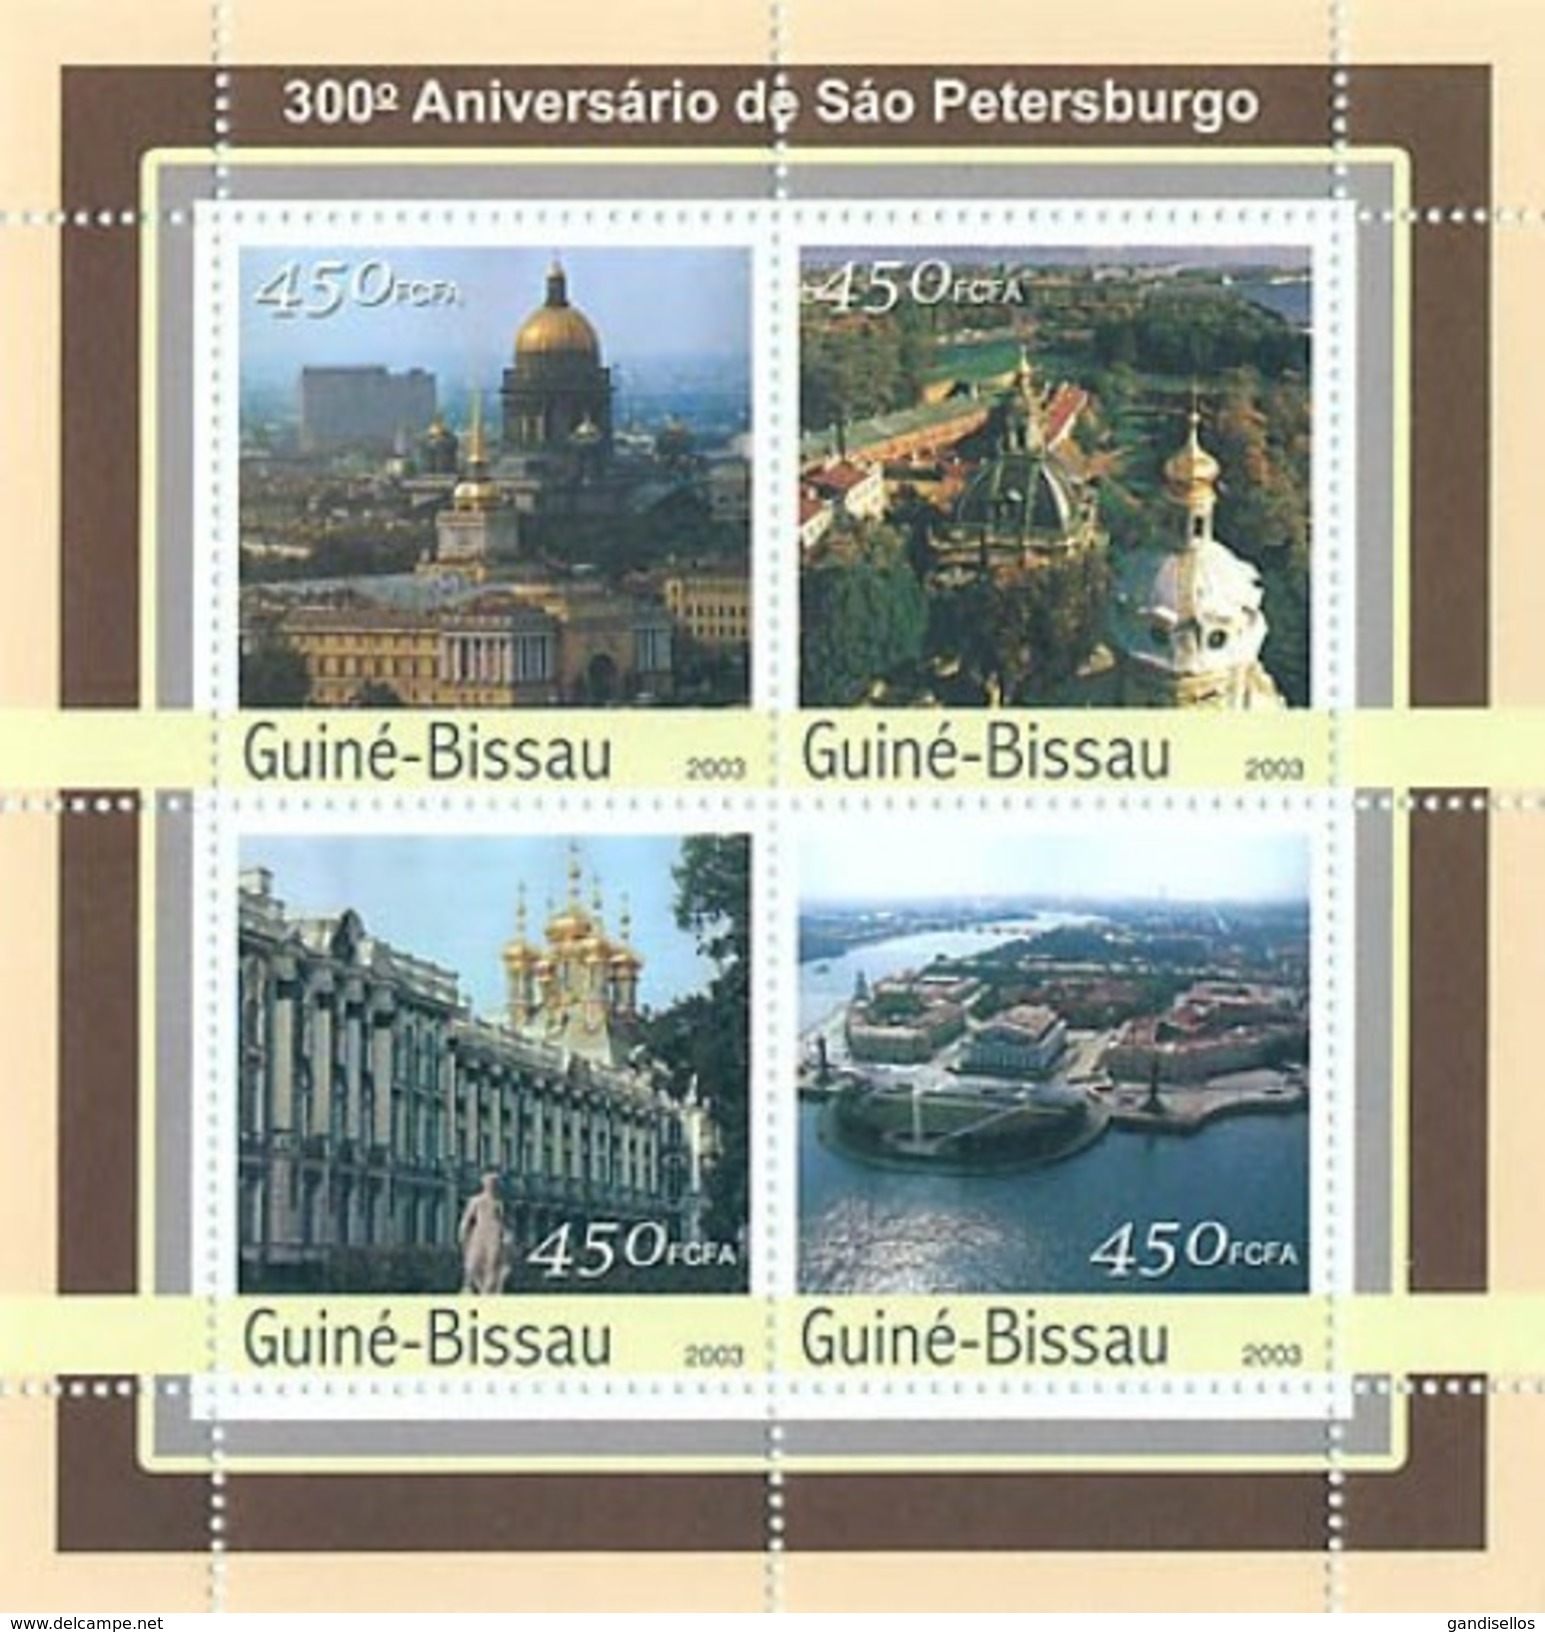 GUINE BISSAU 2003 SHEET ANNIVERSARY SAINT PETERSBURG SAN PETERSBURGO Gb3115 - Guinea-Bissau